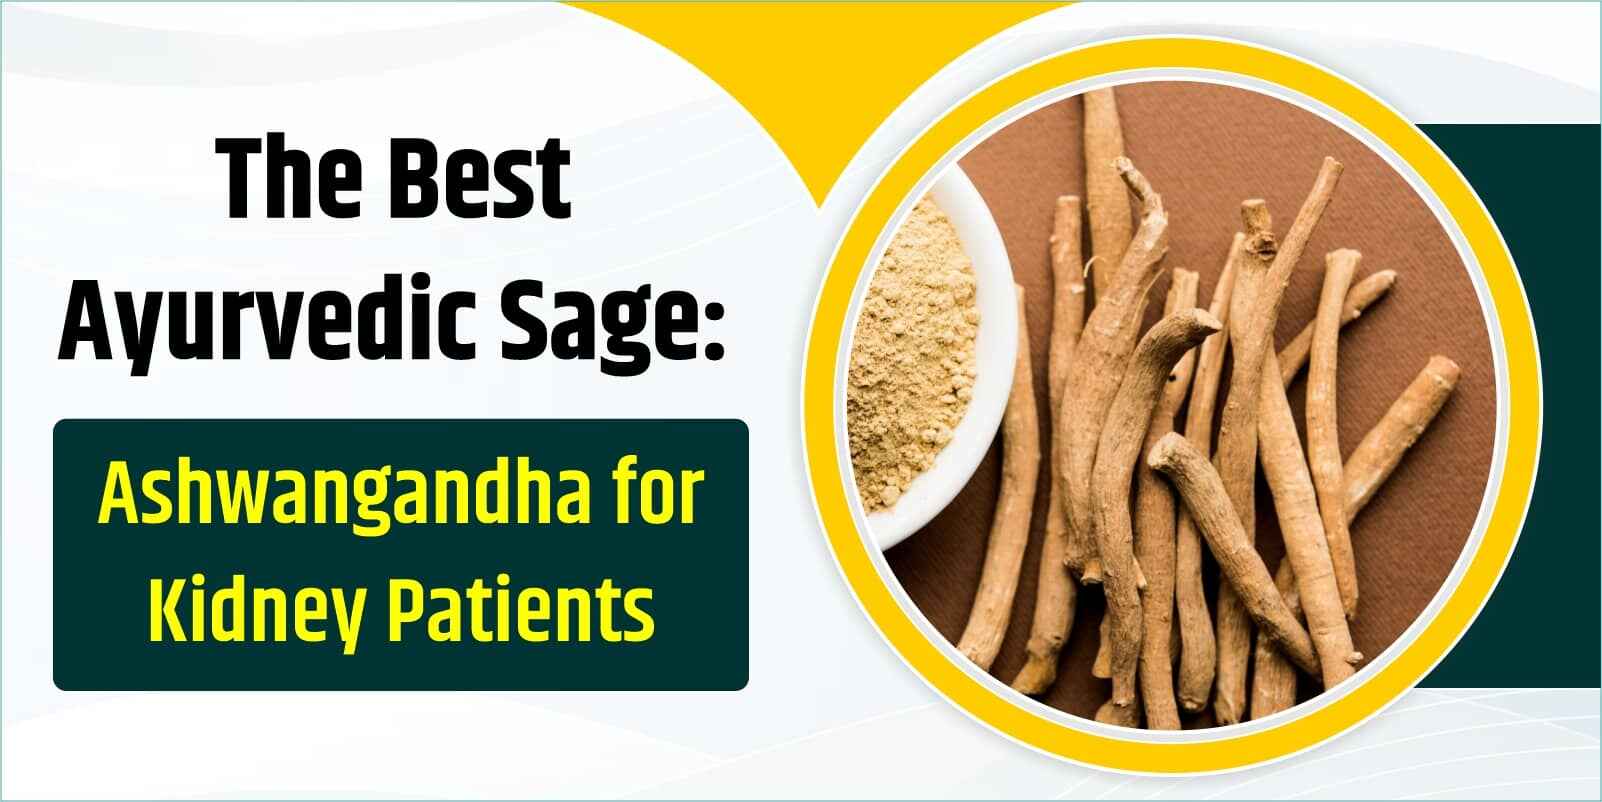 The Best Ayurvedic Sage: Ashwangandha for Kidney Patients